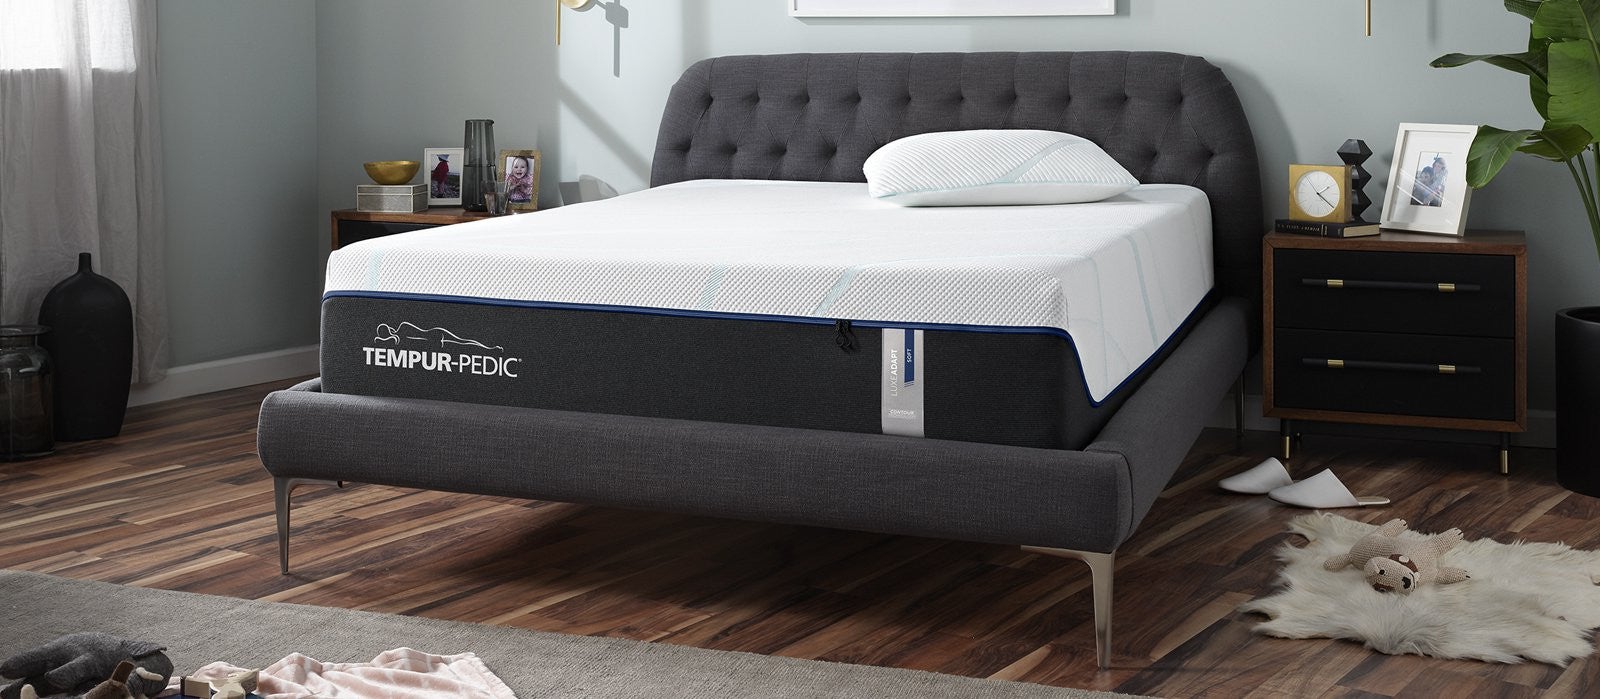 do tempur pedic mattresses go on sale